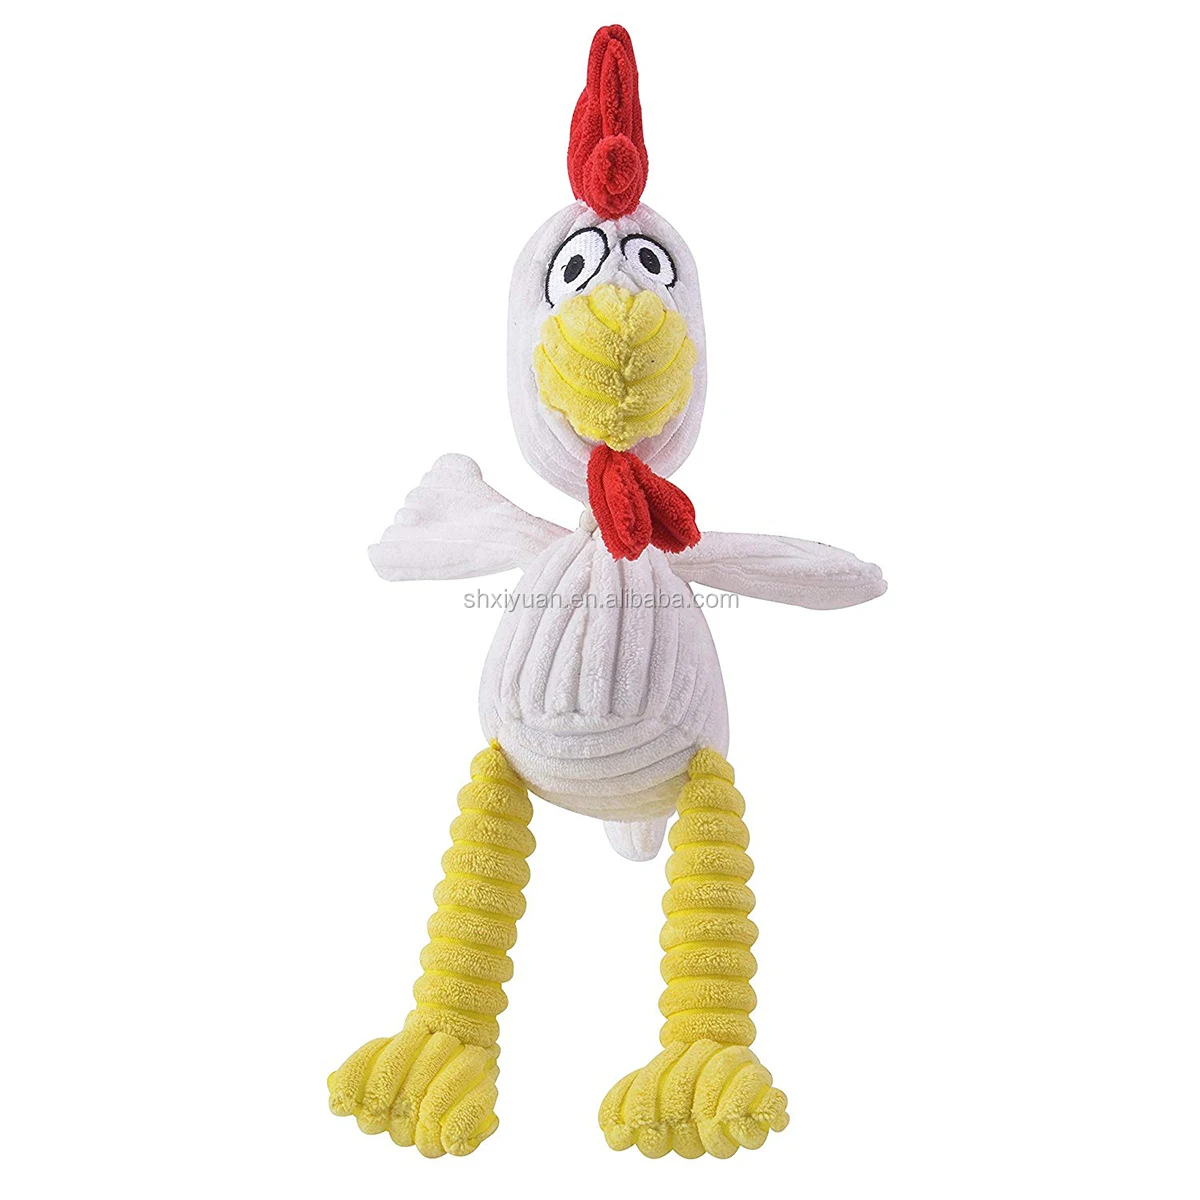 chicken squeaky dog toy